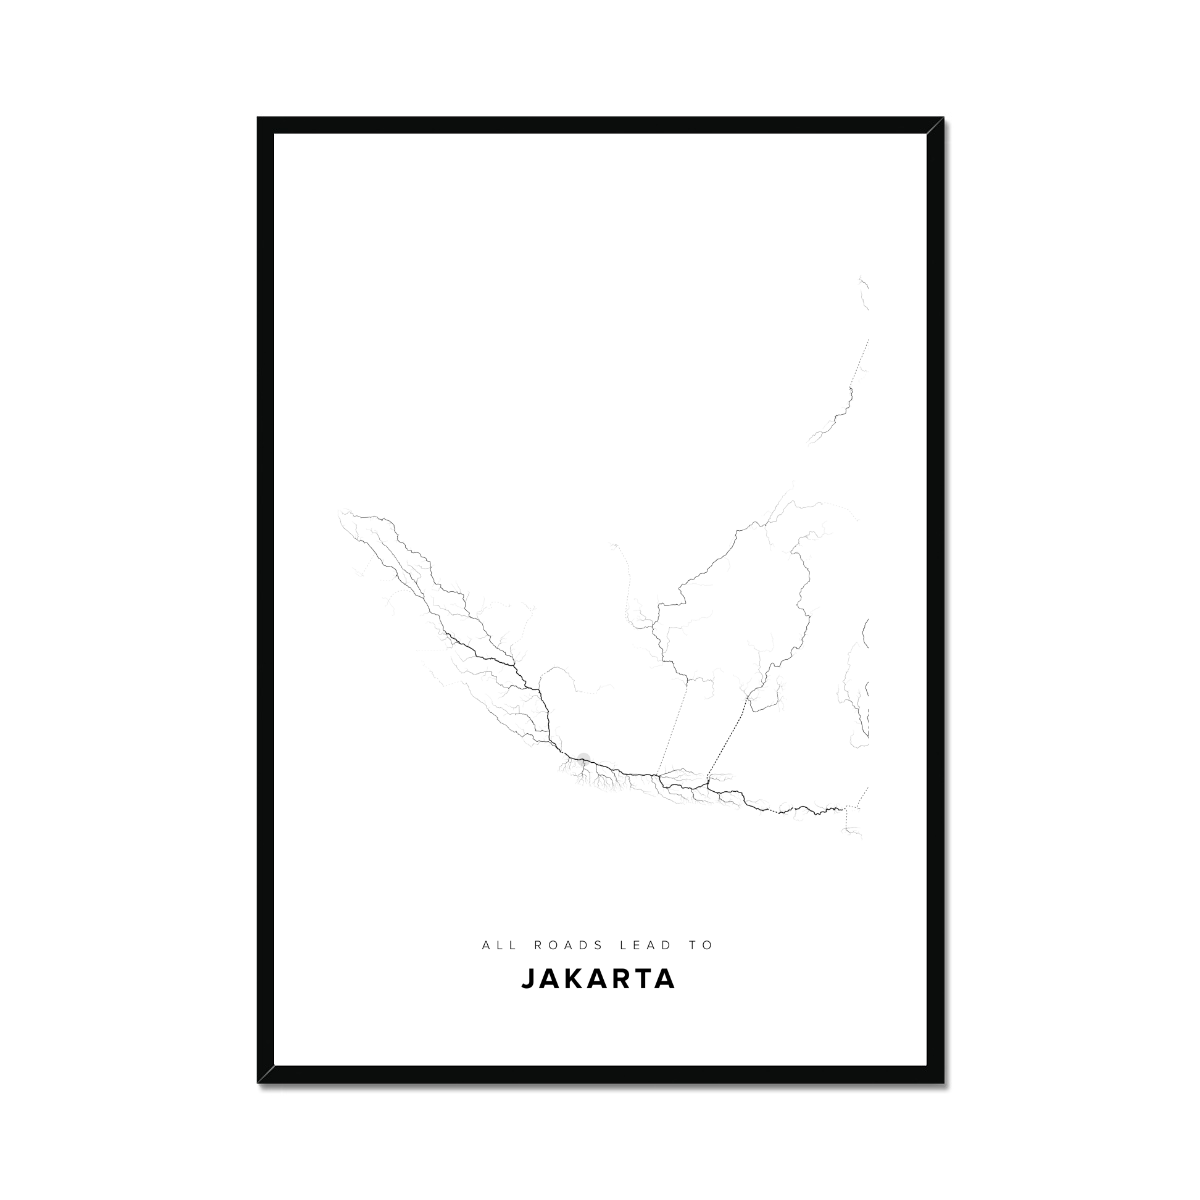 All roads lead to Jakarta (Indonesia) Fine Art Map Print